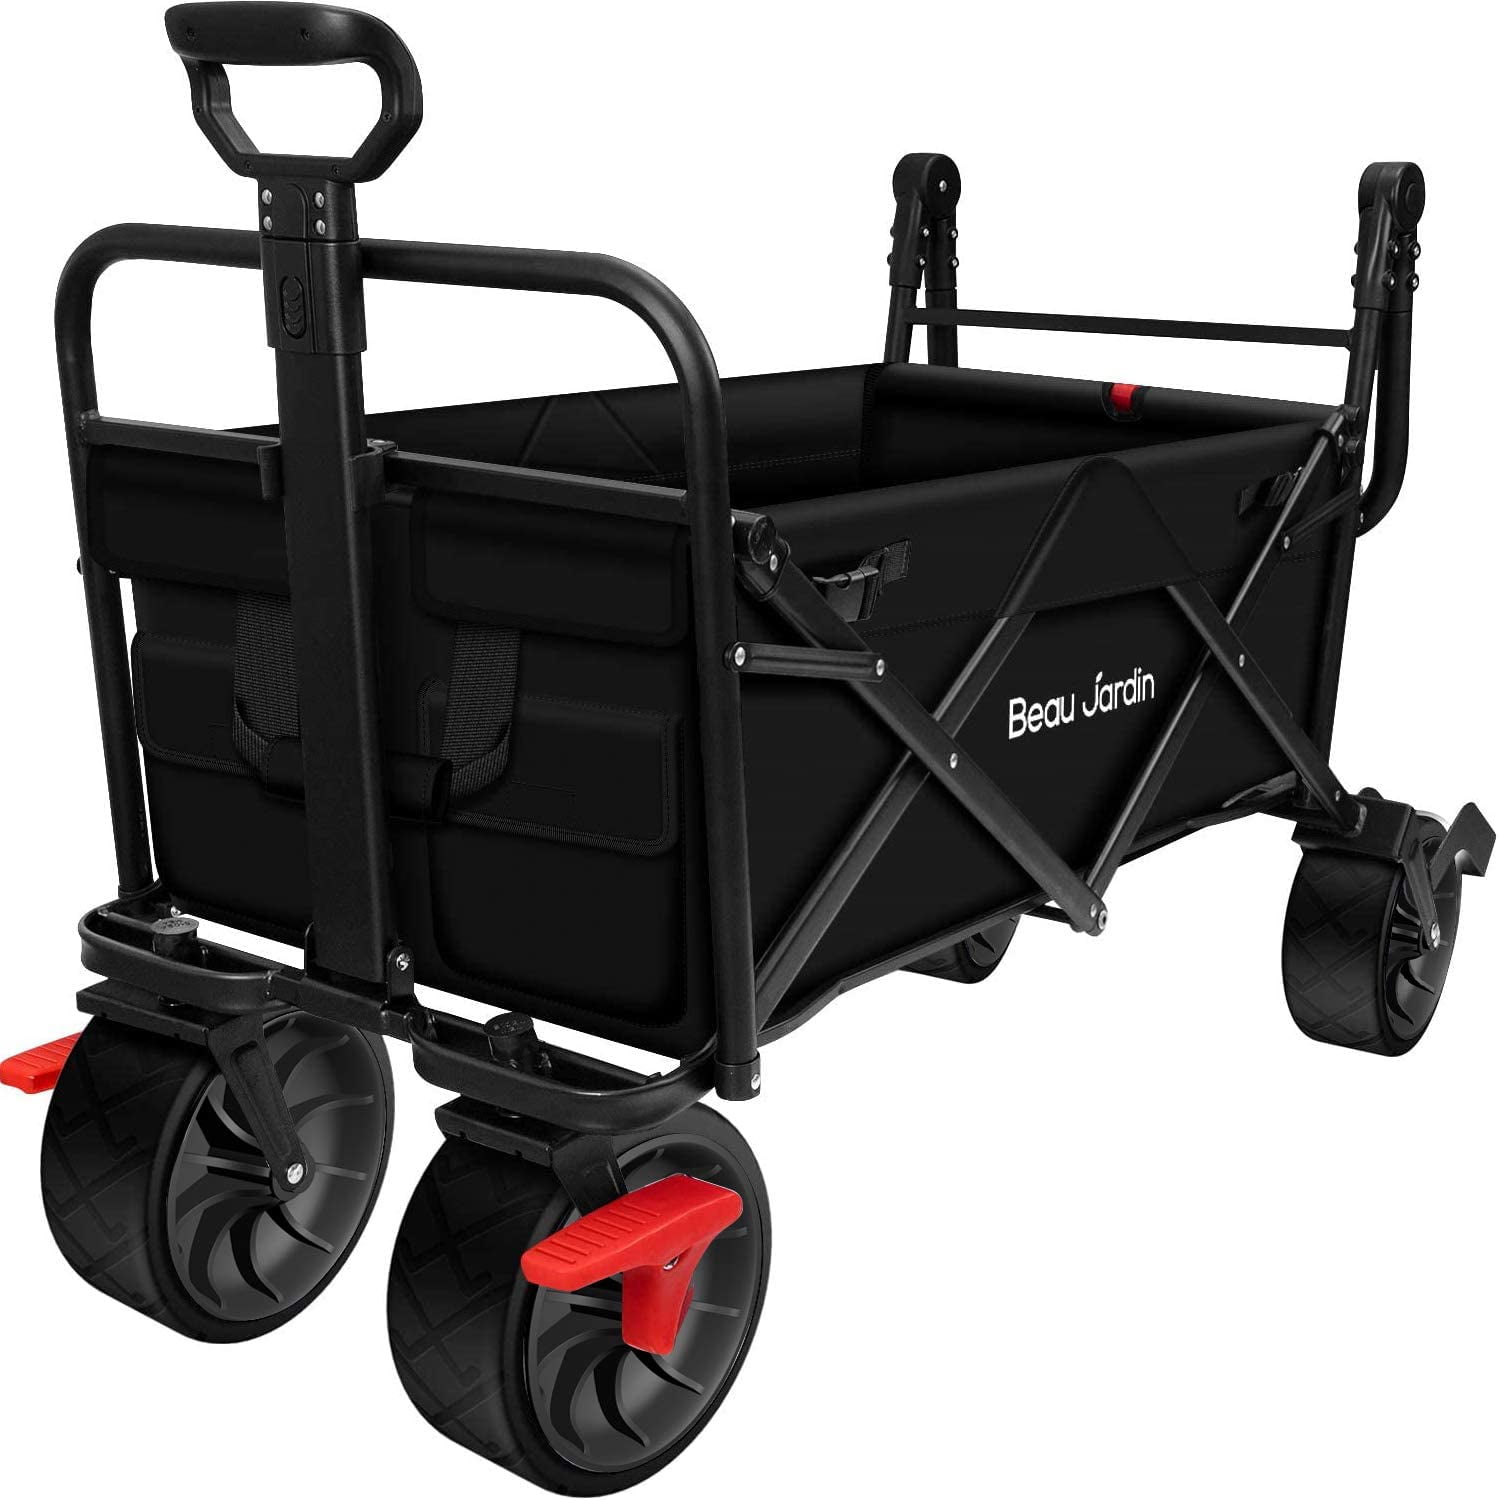 BEAU JARDIN Folding Wagon Cart with 1 Nylon Net 2 Straps Canopy Collapsible 